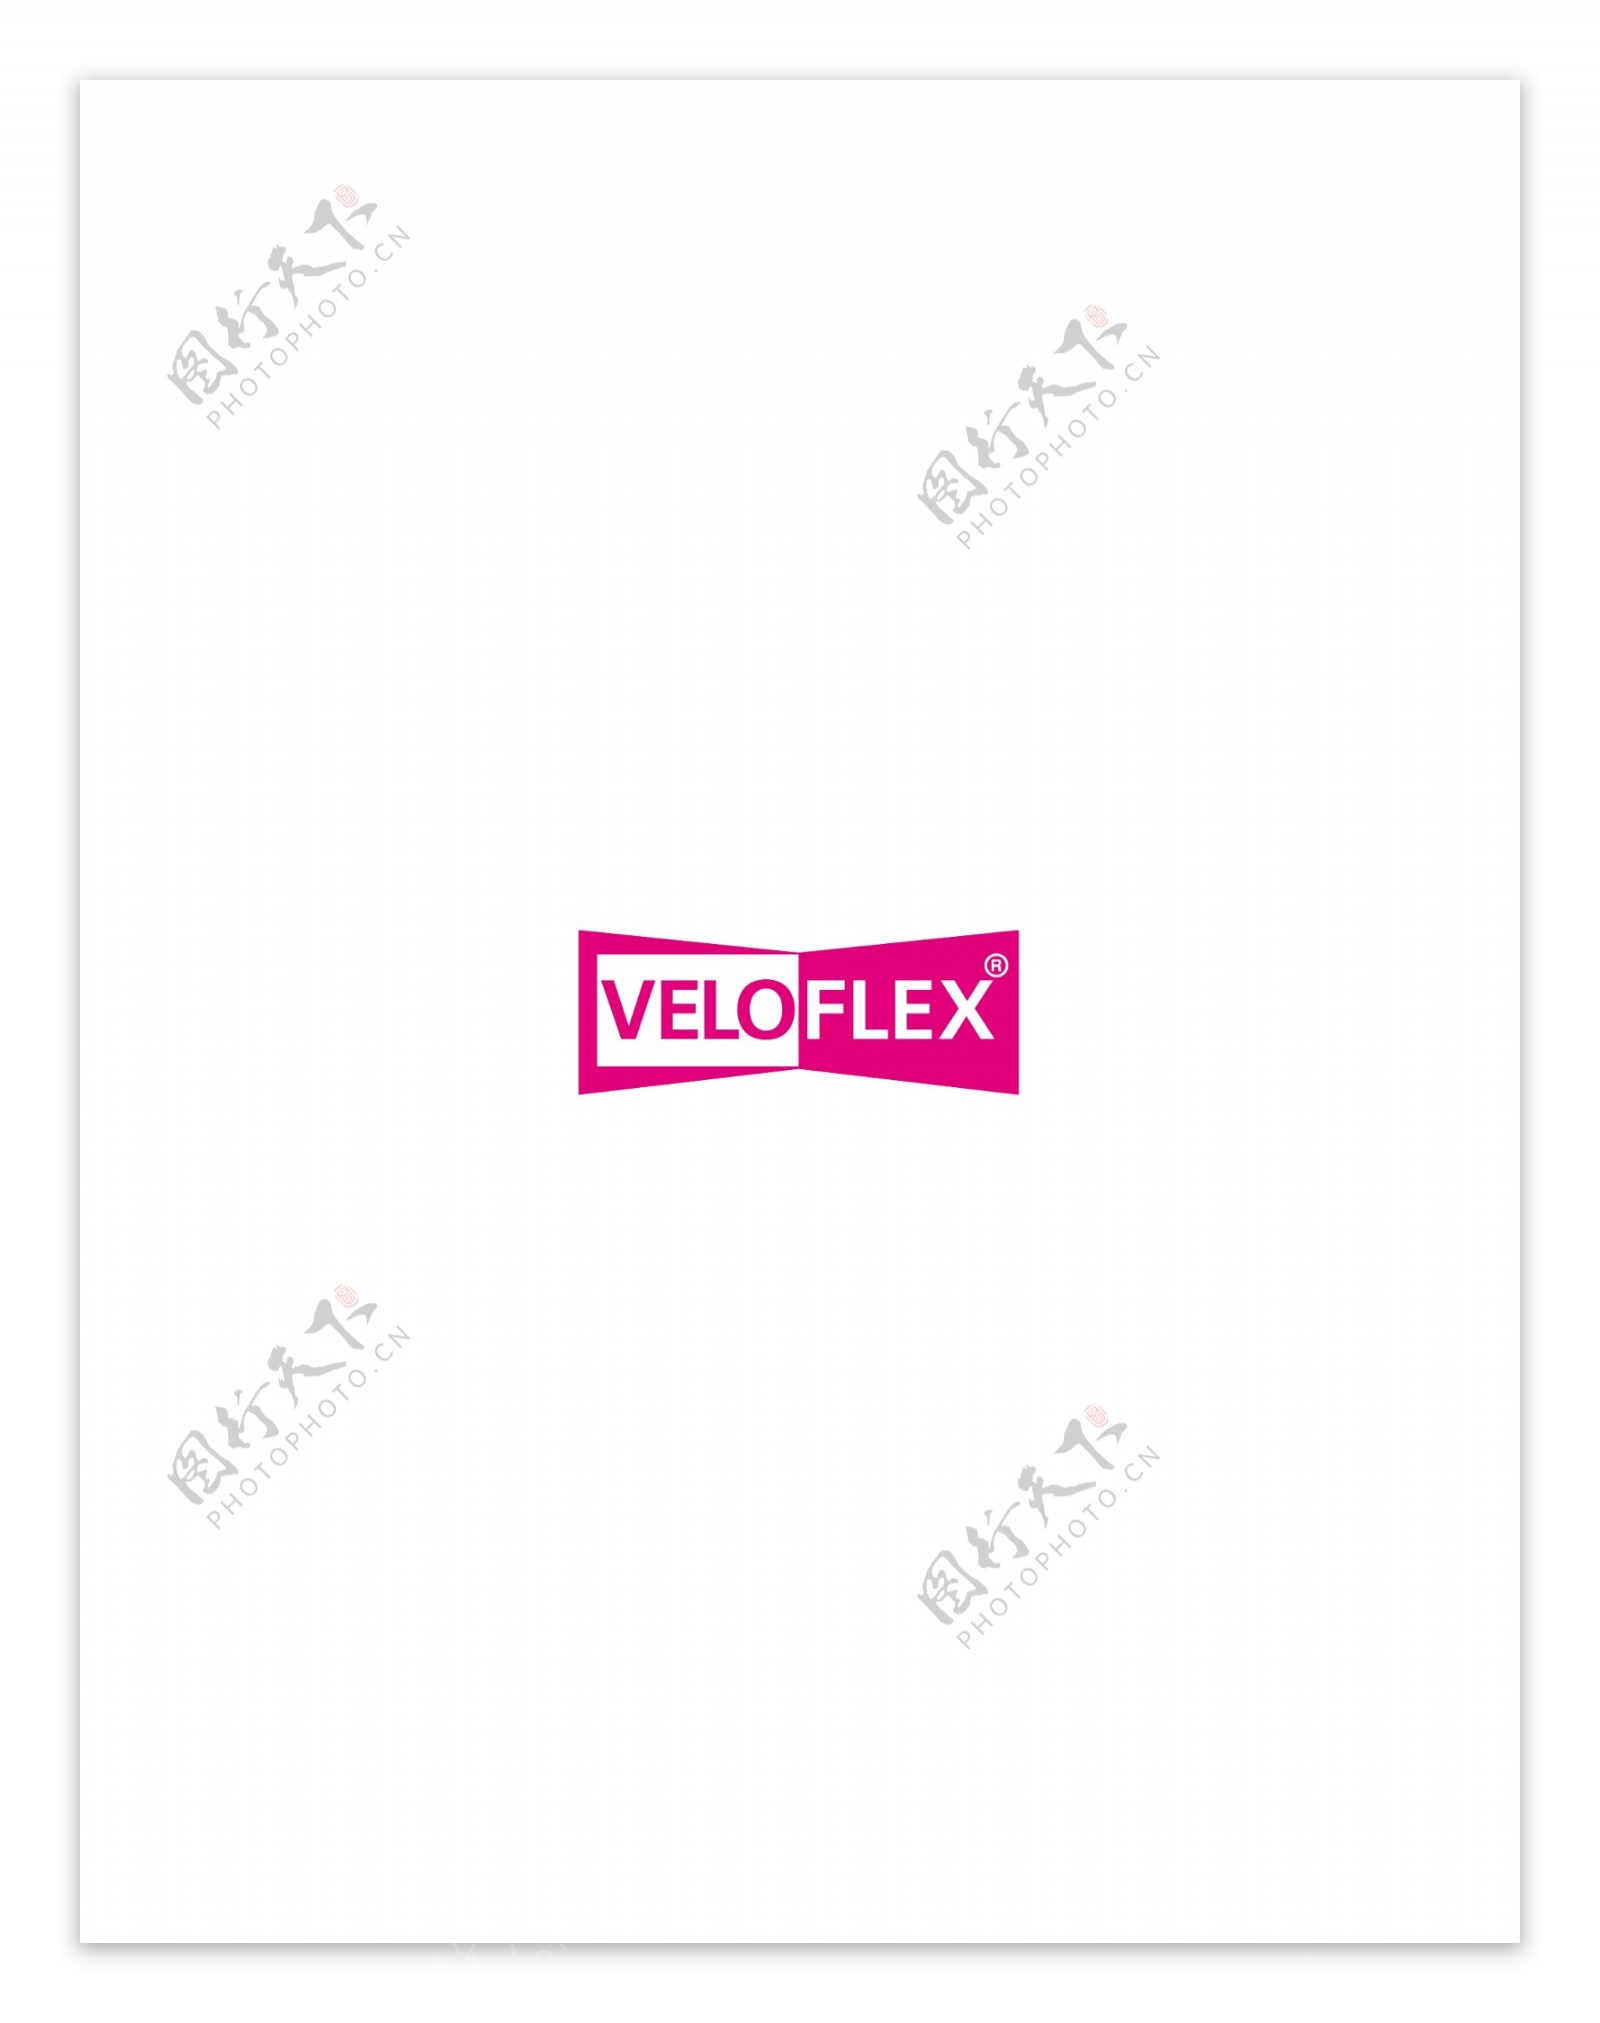 Veloflexlogo设计欣赏足球队队徽LOGO设计Veloflex下载标志设计欣赏